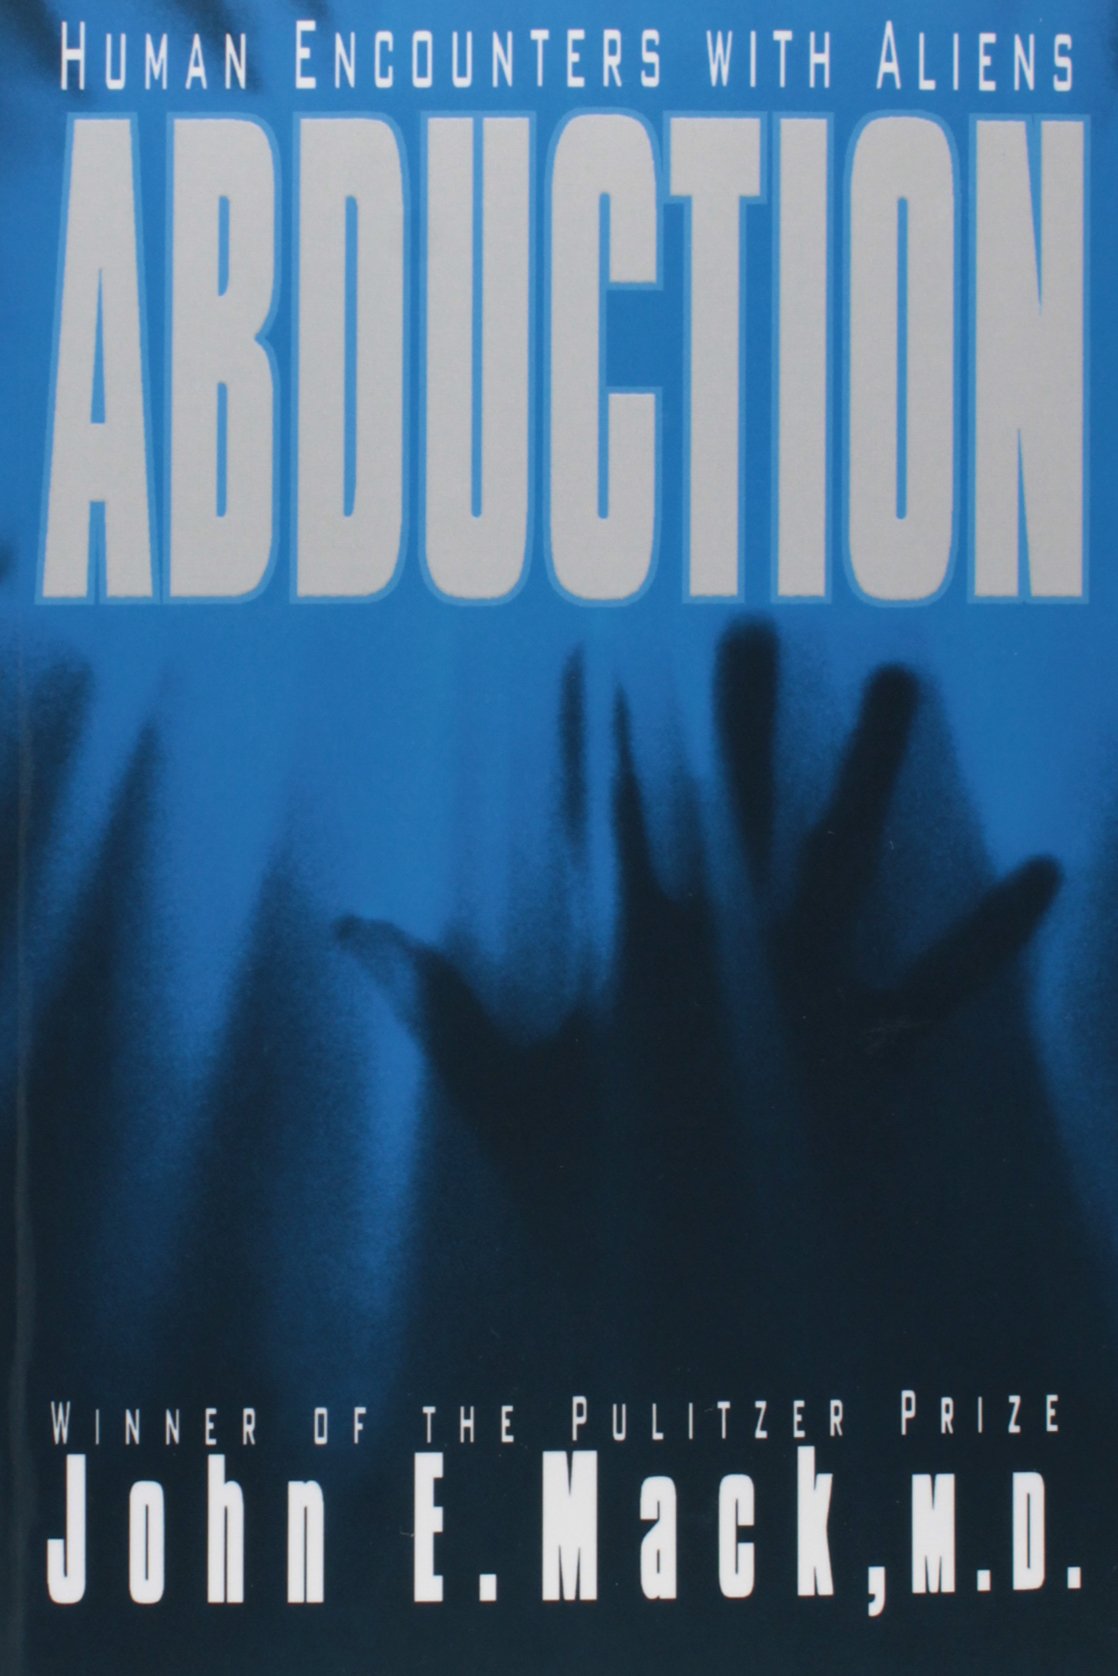 ‘Abduction’ by John E. Mack